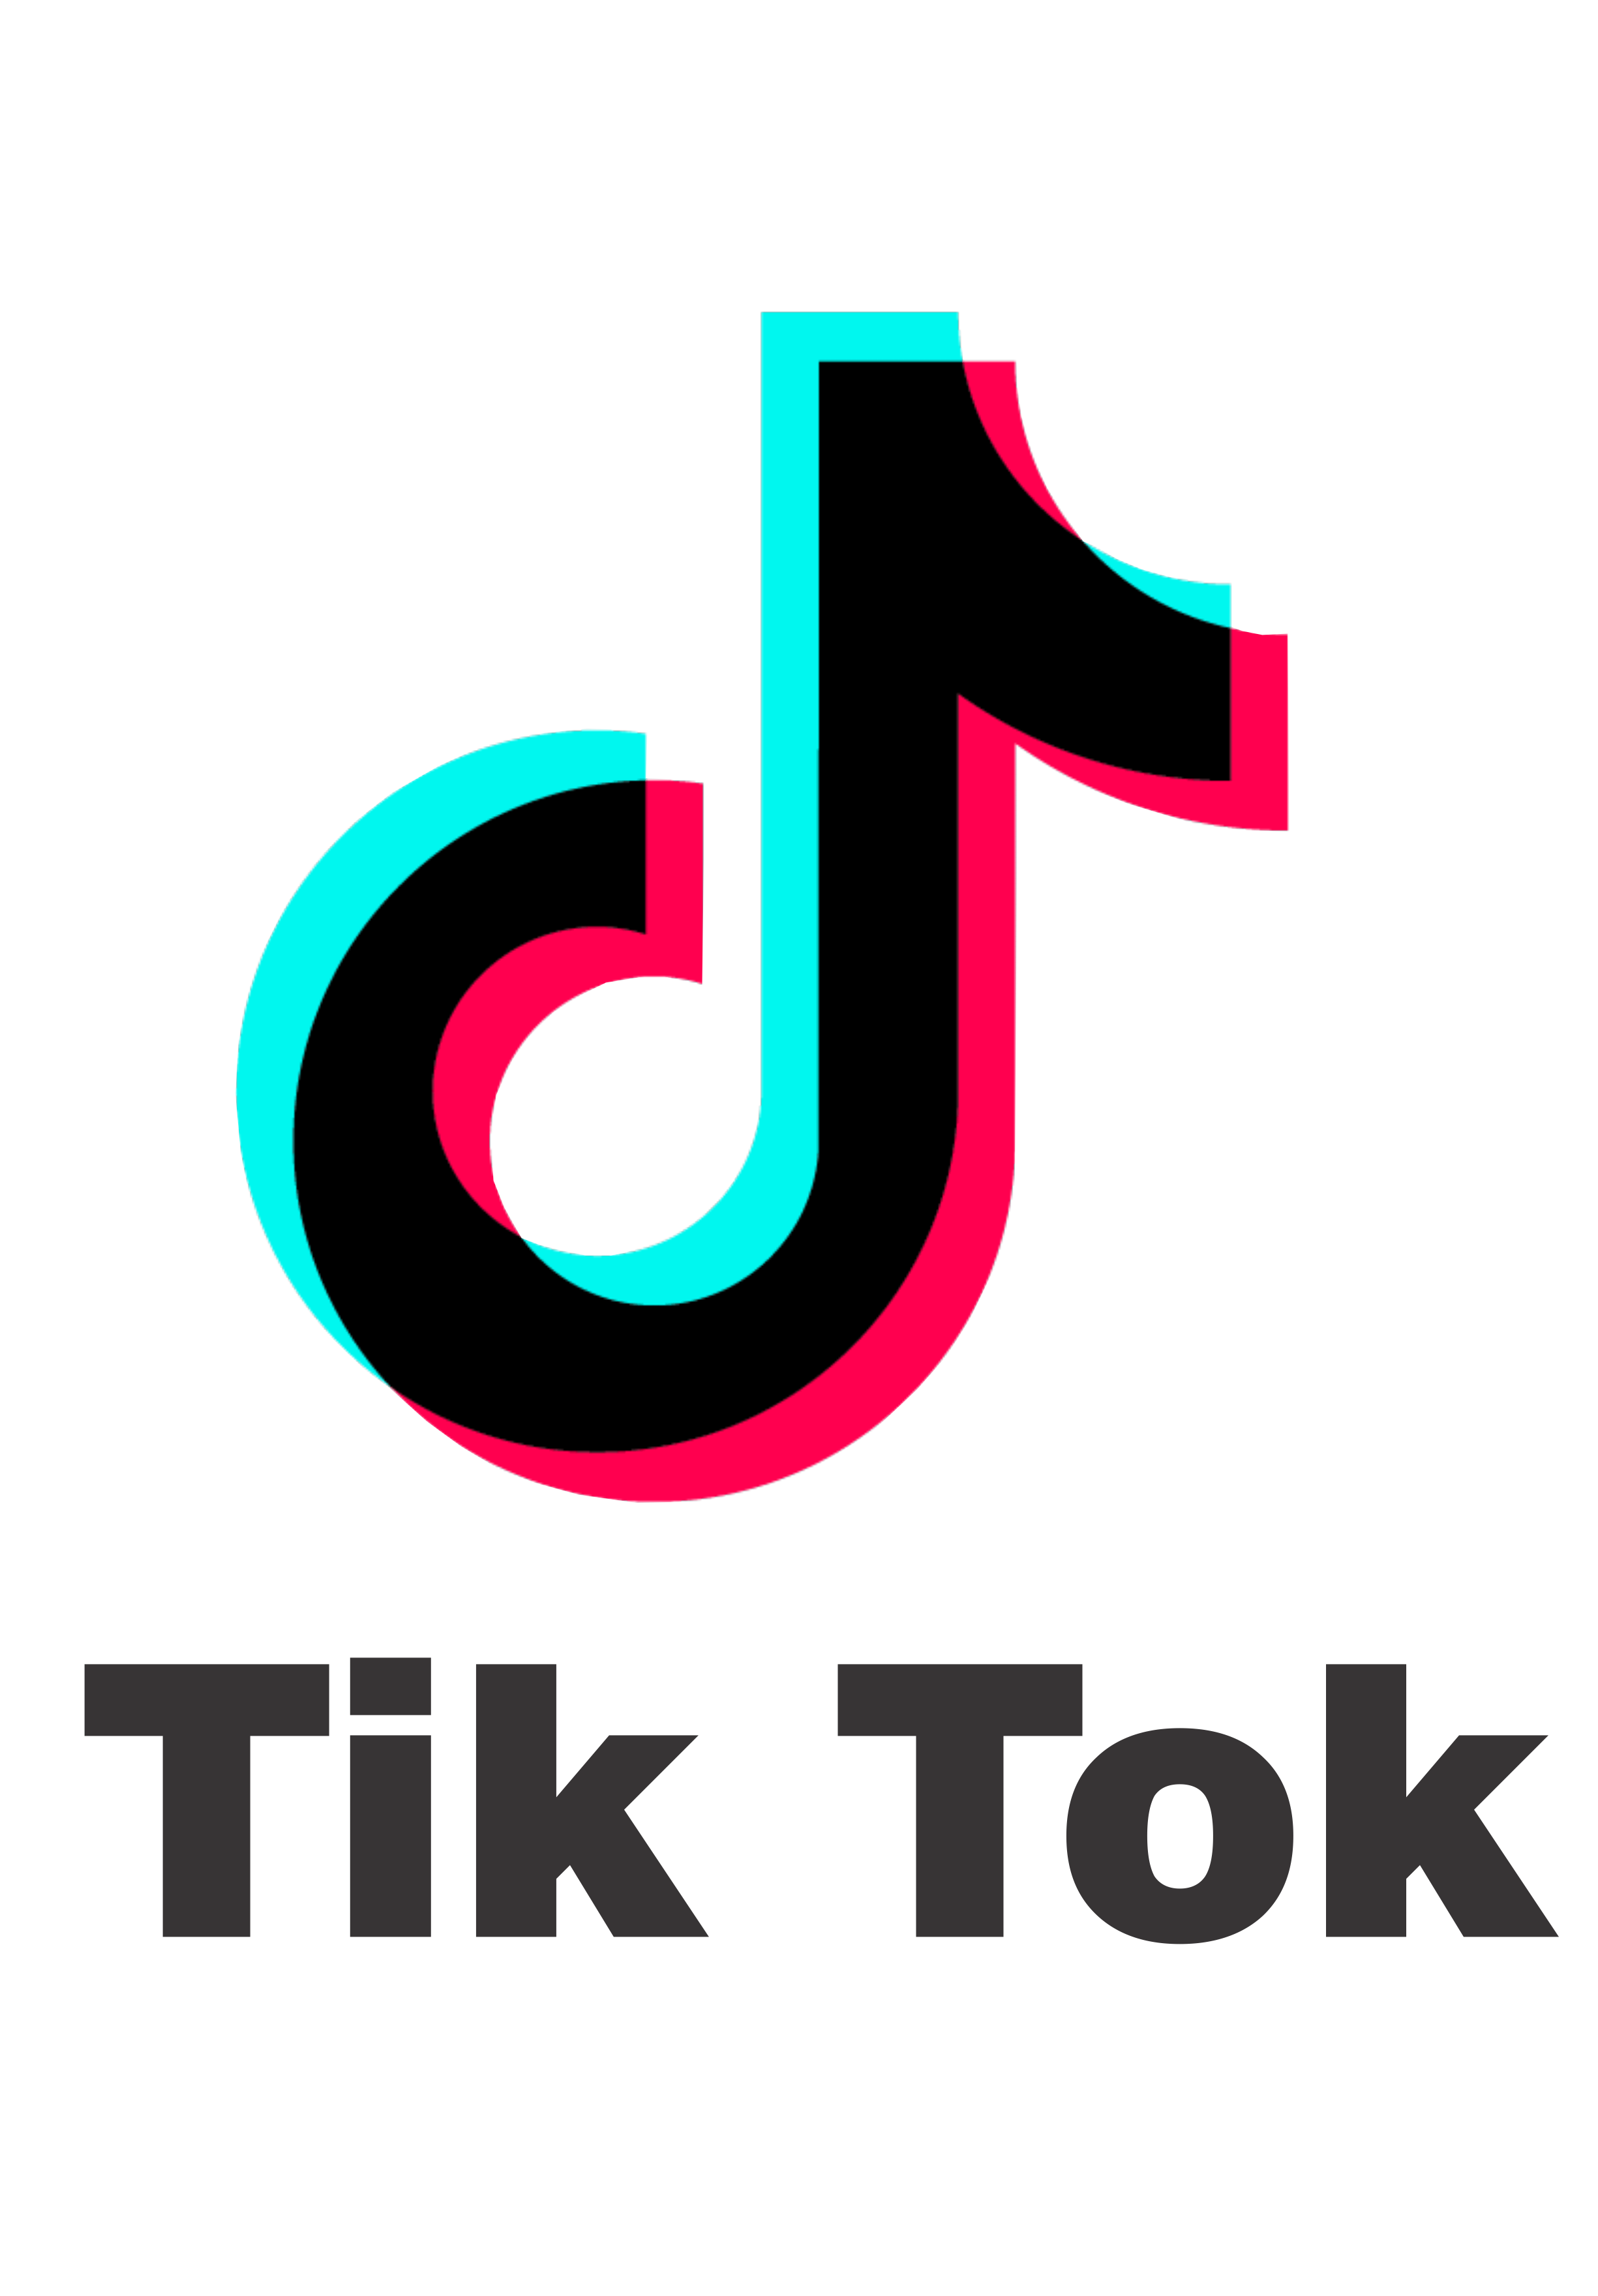 Tik Tok Logo Wallpaper